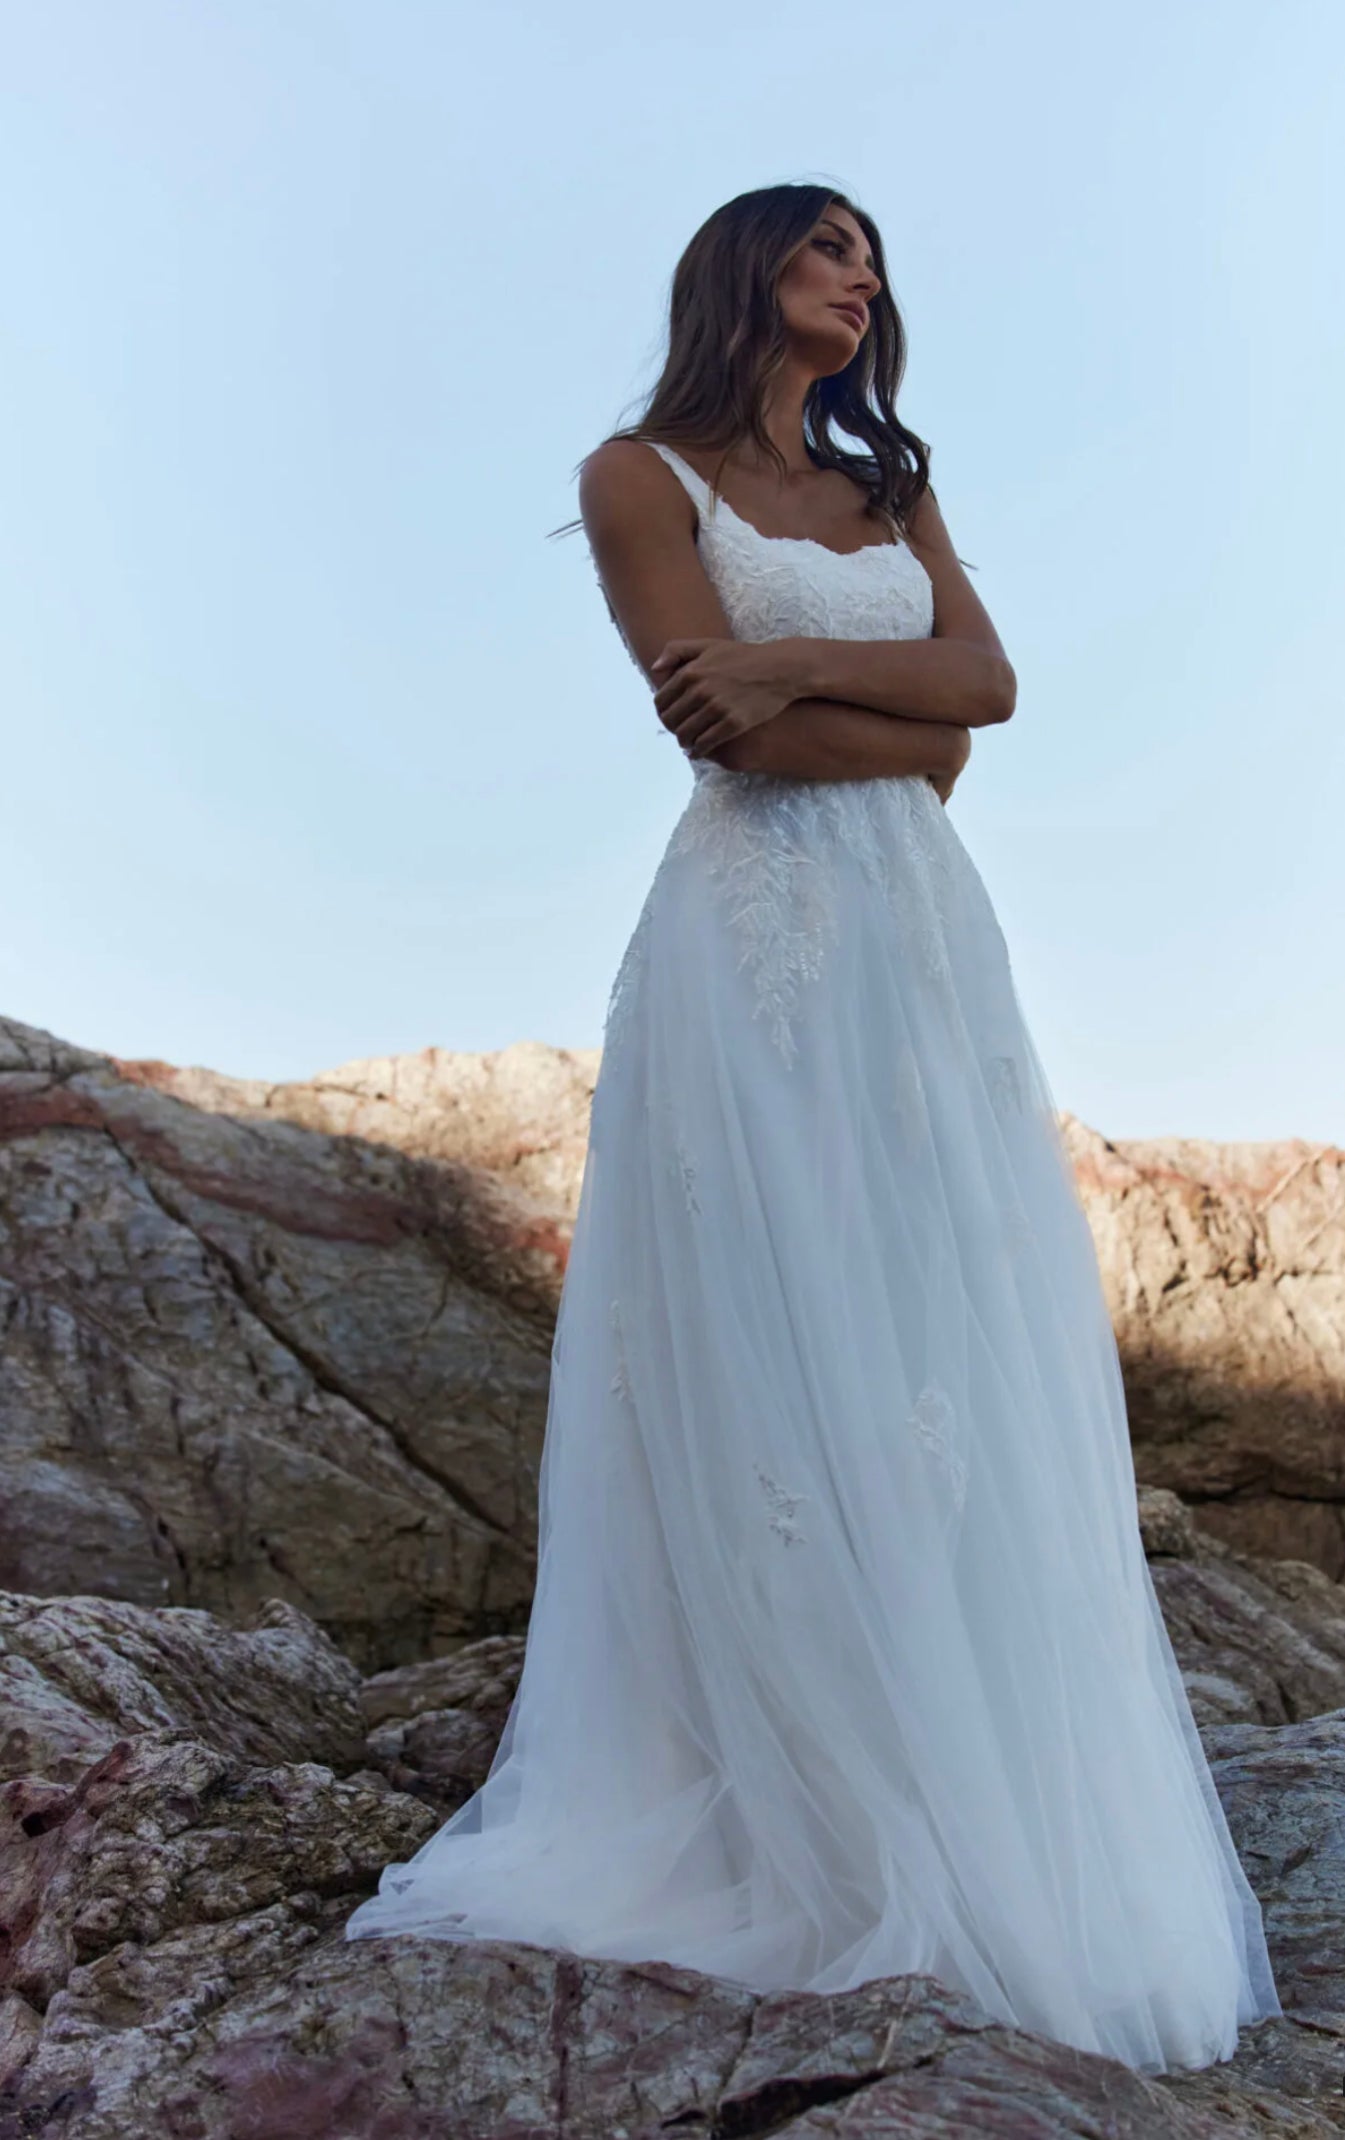 Myrtle by Tania Olsen vintage white wedding dress